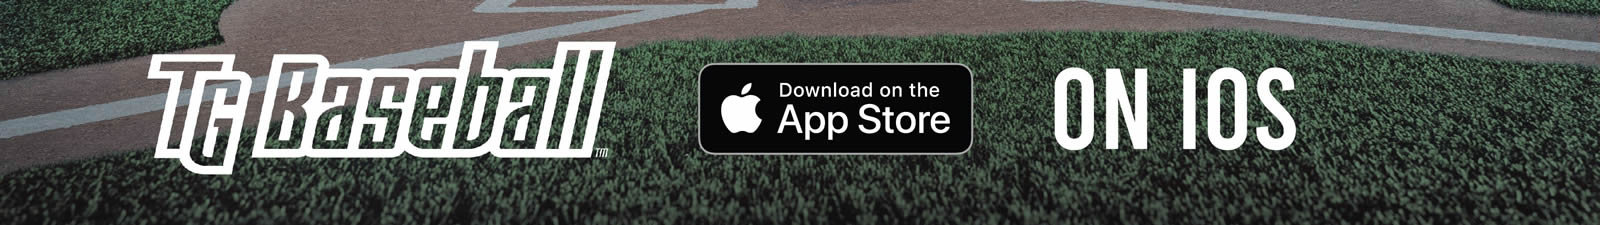 TG Baseball - iOS